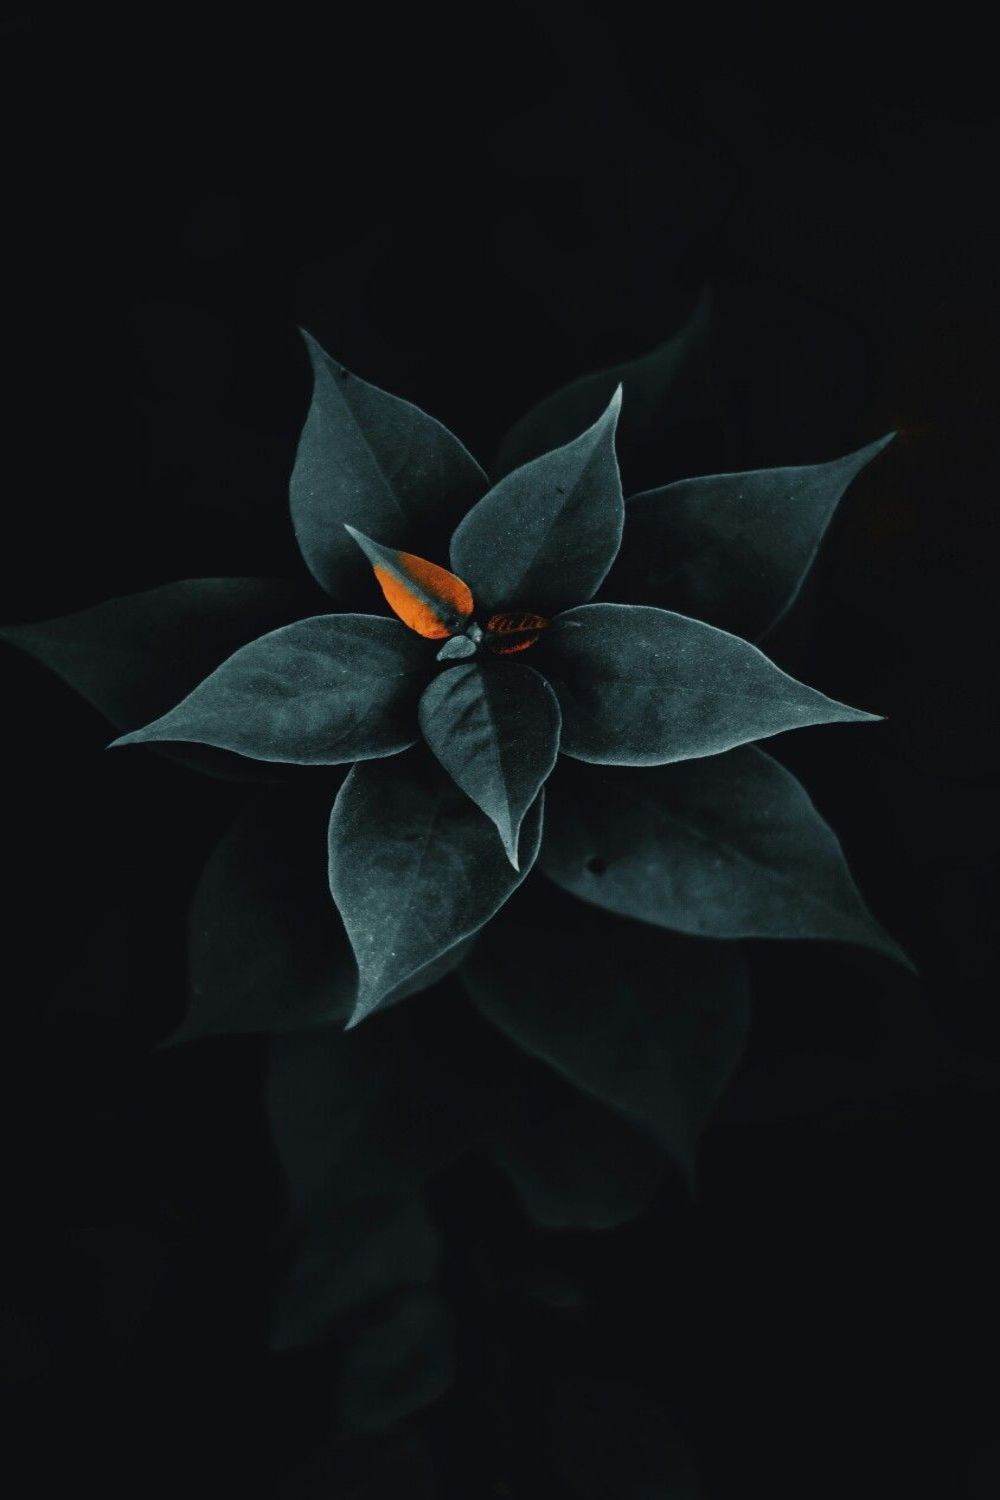 Best Black wallpaper HD 4k Free Downloads. Leaves wallpaper iphone, Flowers black background, Black wallpaper